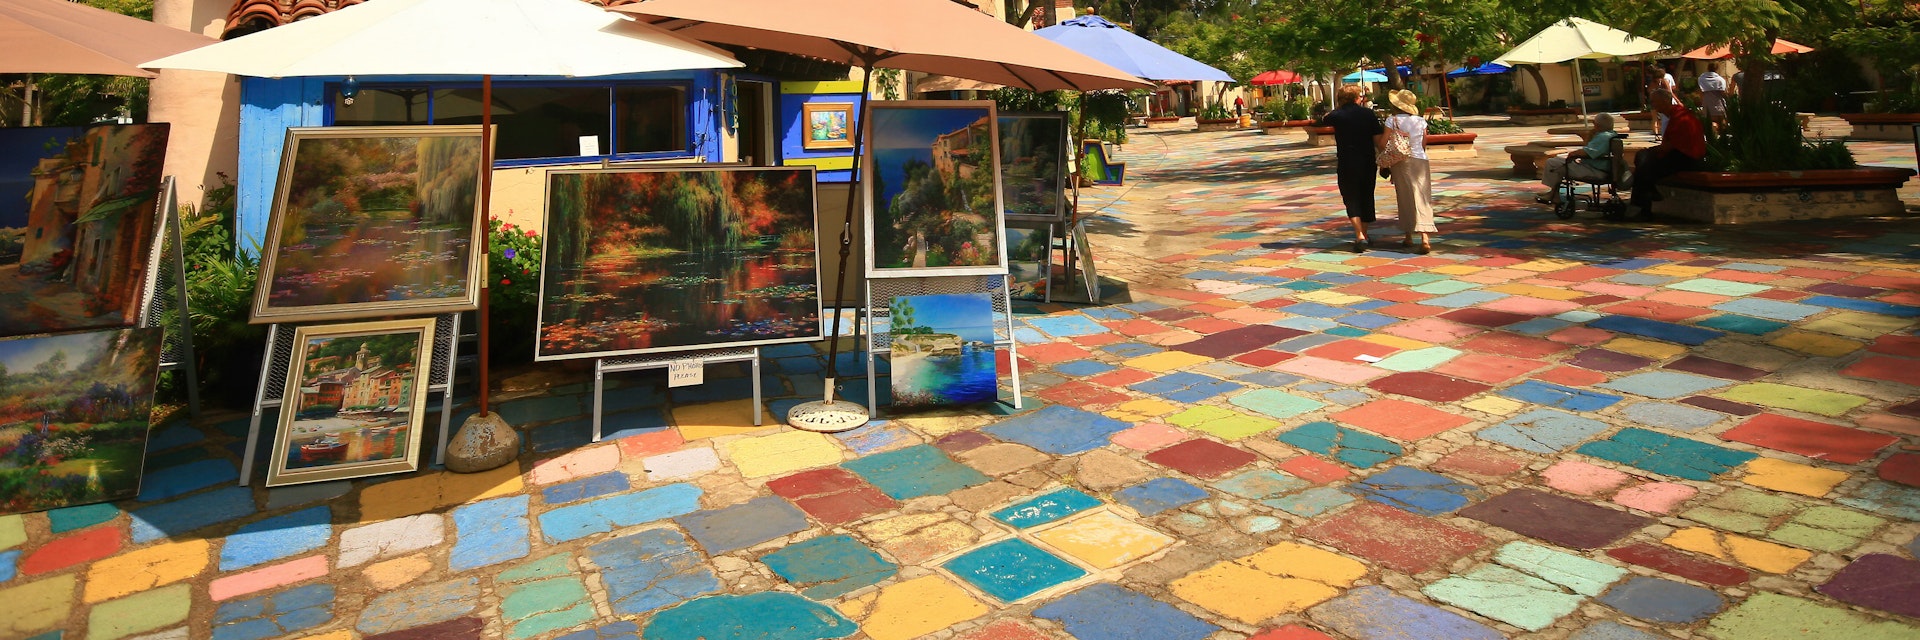 The Spanish Village Art Center in Balboa Park